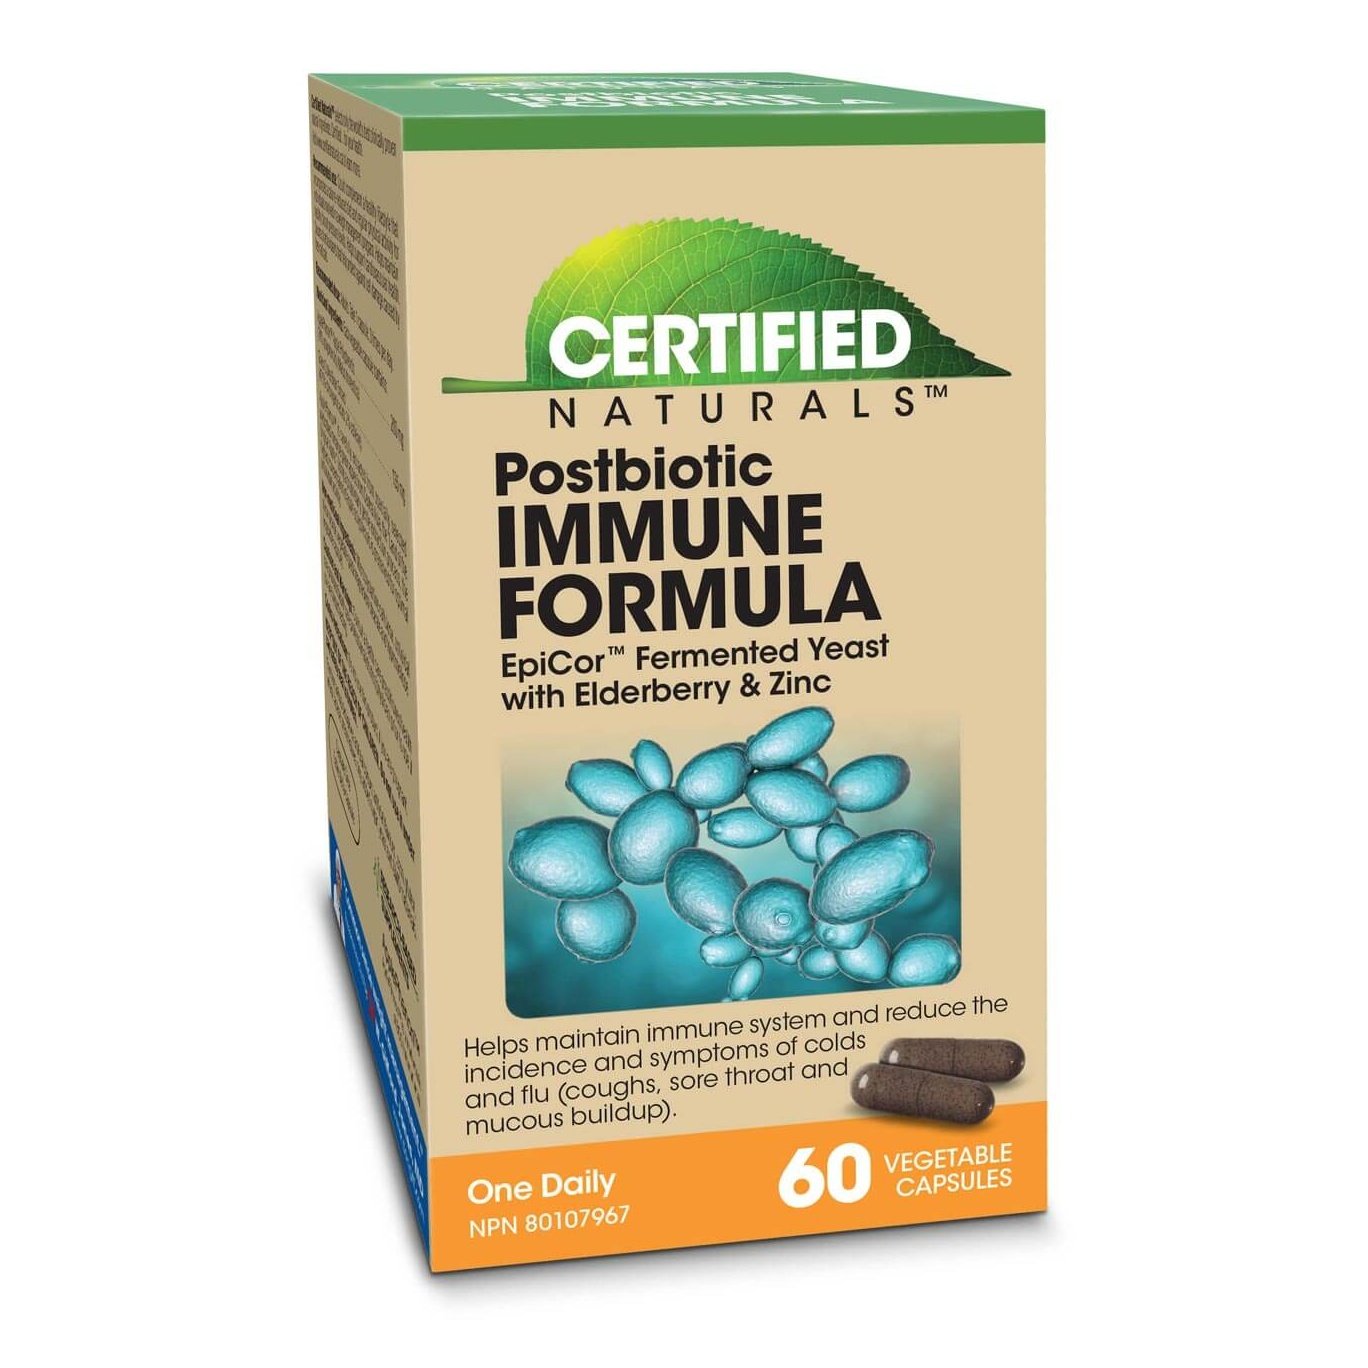 Certified Naturals Postbiotic Immune Formula Epicor Capsules Win In Health